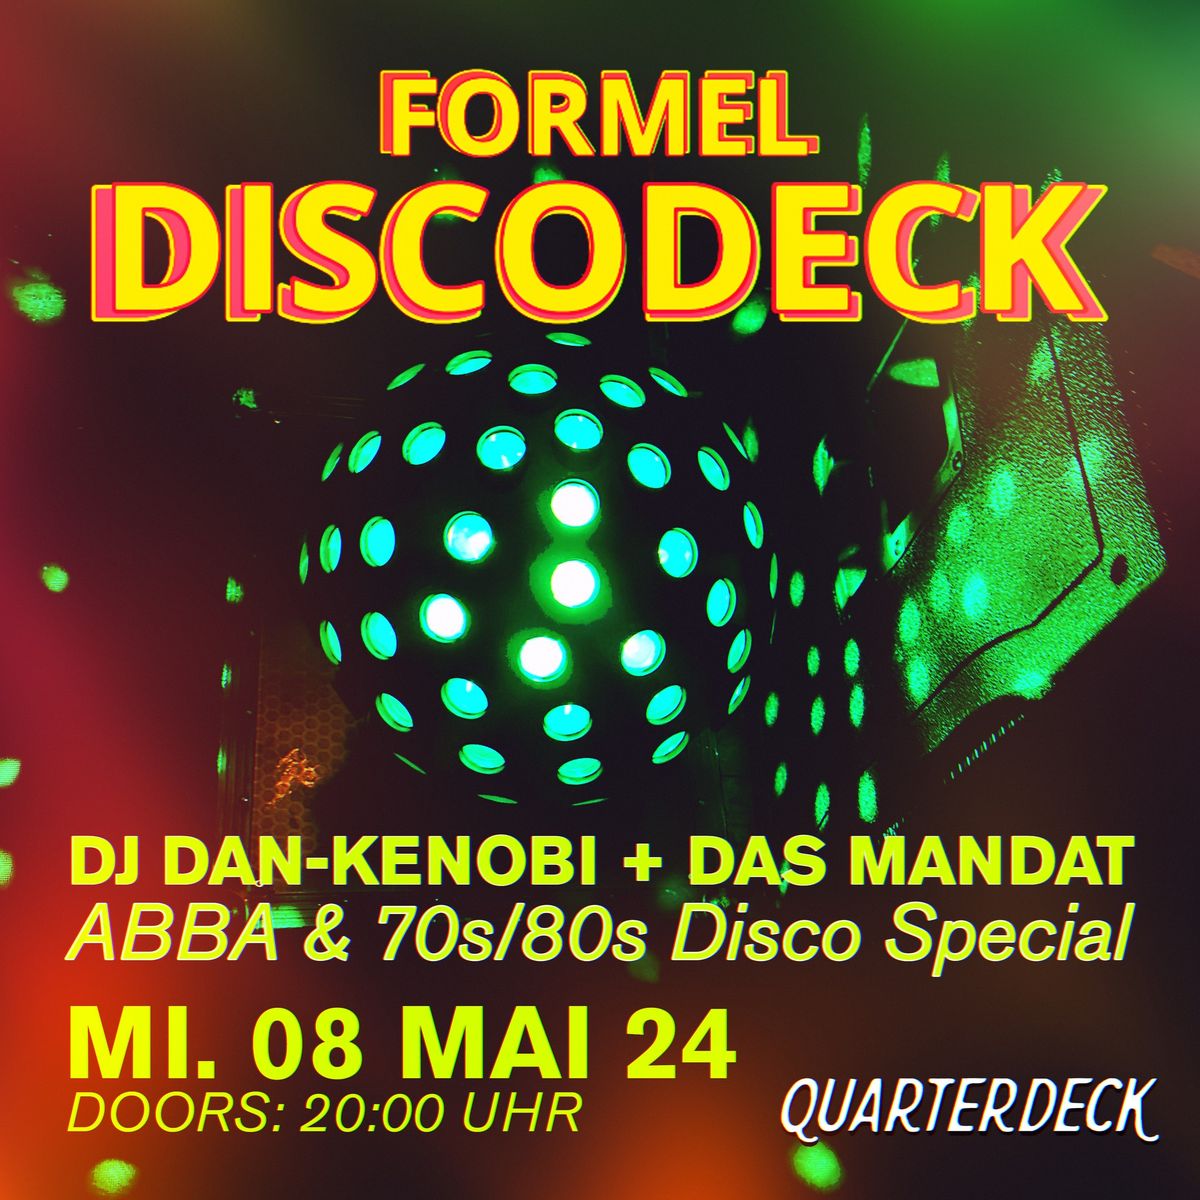 FORMEL-DISCO-DECK: ABBA & 70s\/80s Disco-Special